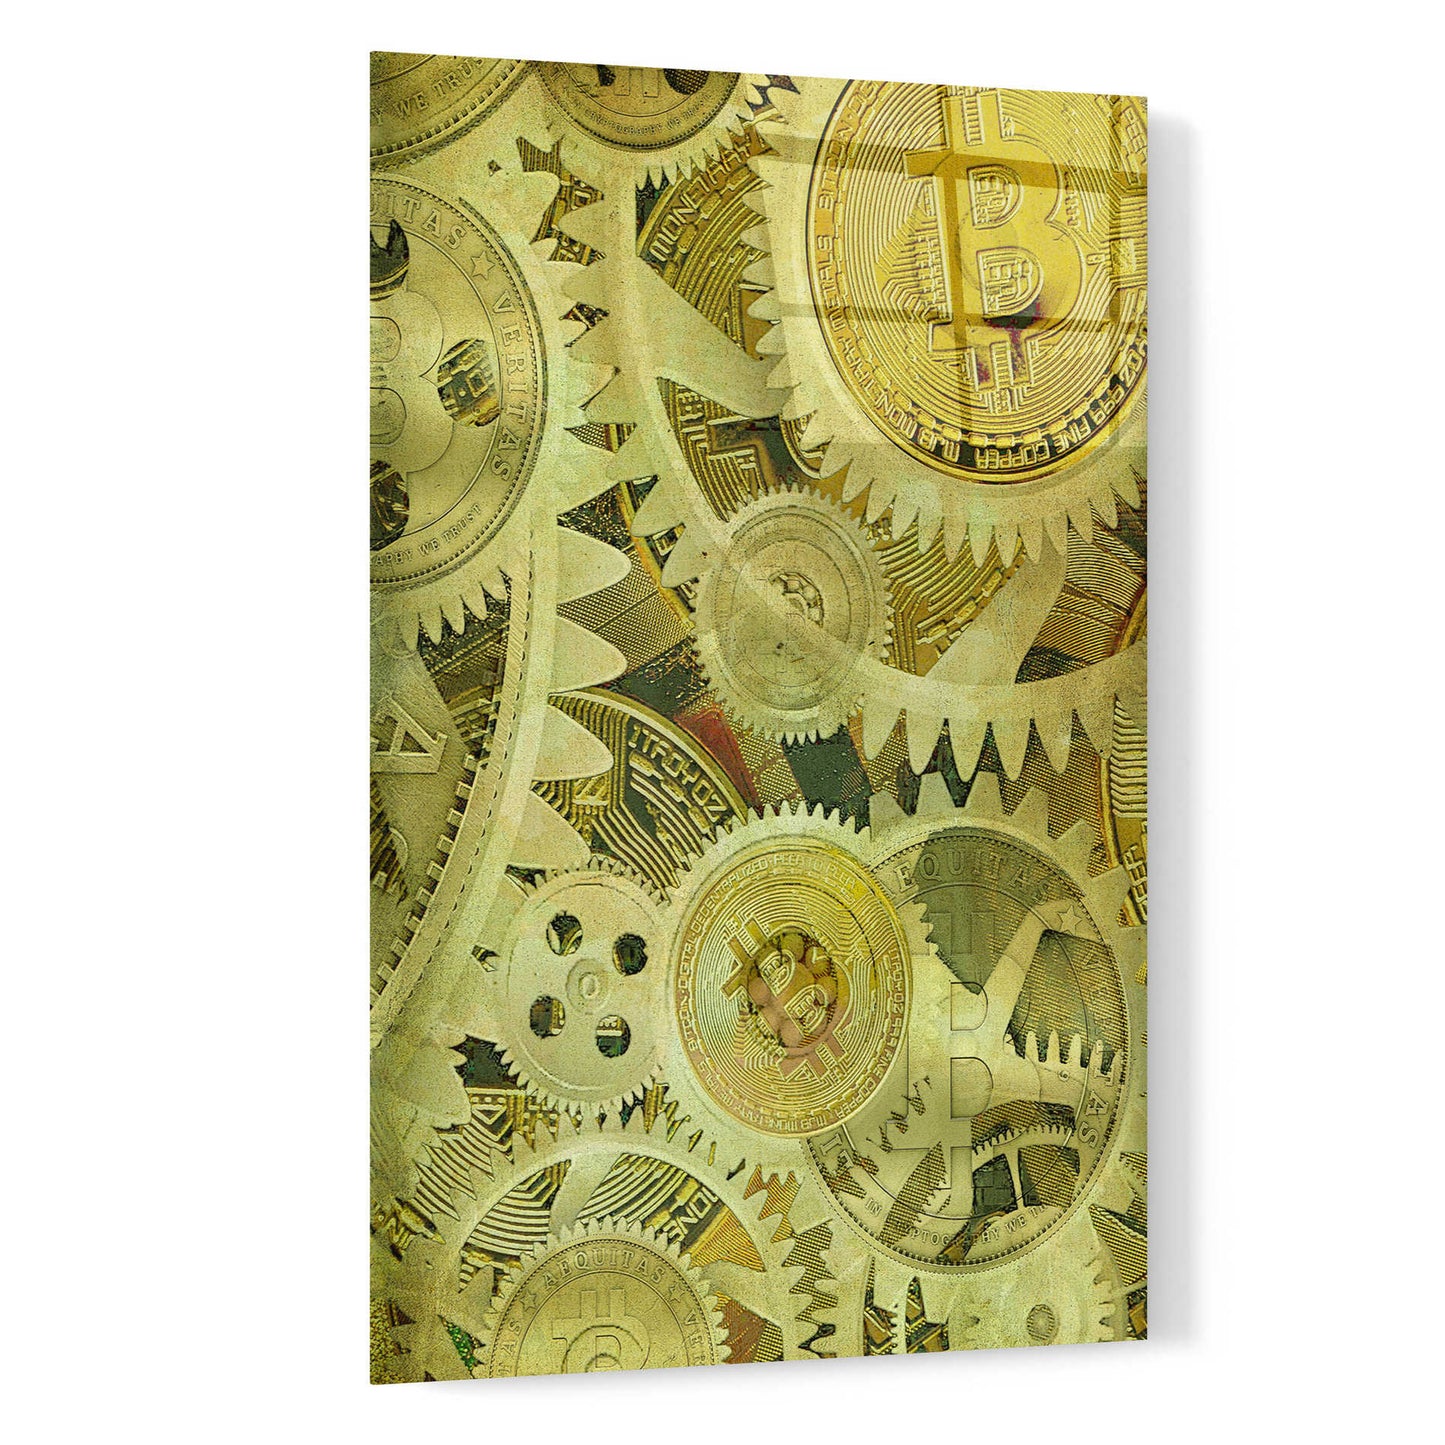 Epic Art 'Grunge Bitcoin Six' by Steve Hunziker, Acrlic Glass Wall Art,16x24